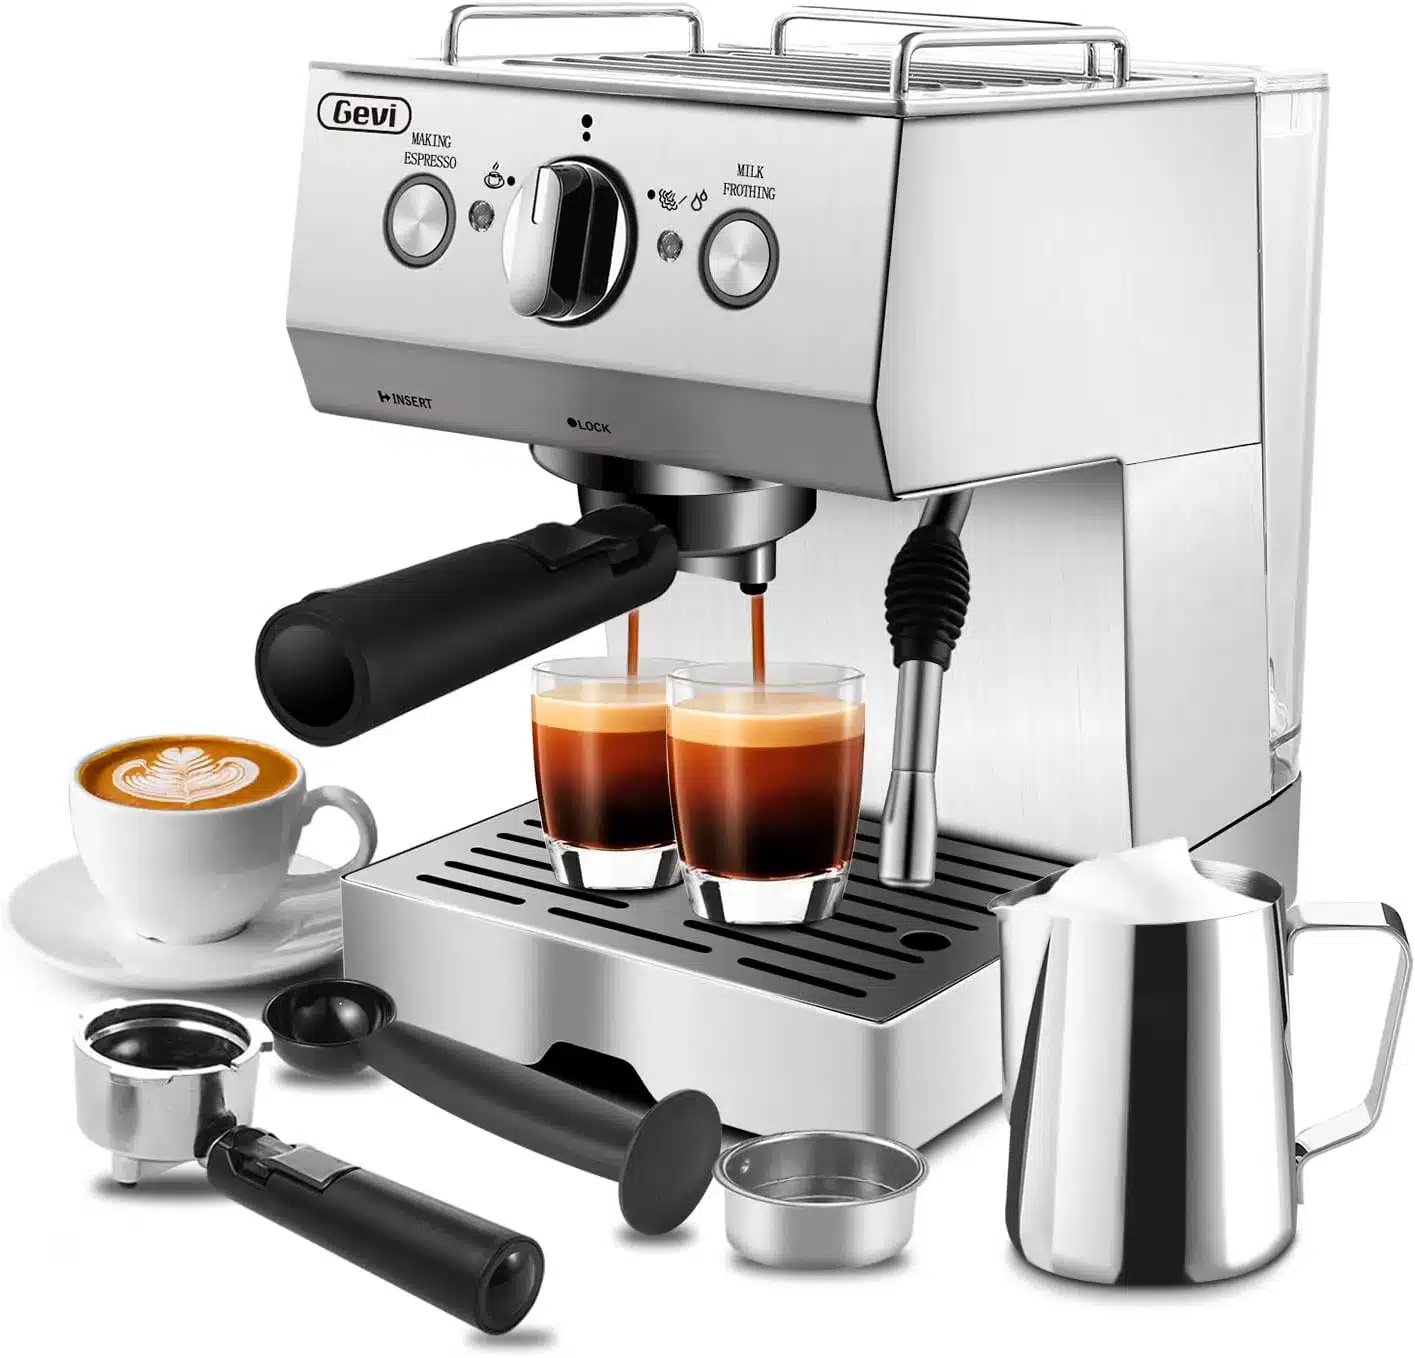 Gevi 15 Bar Espresso Coffee Maker Machine